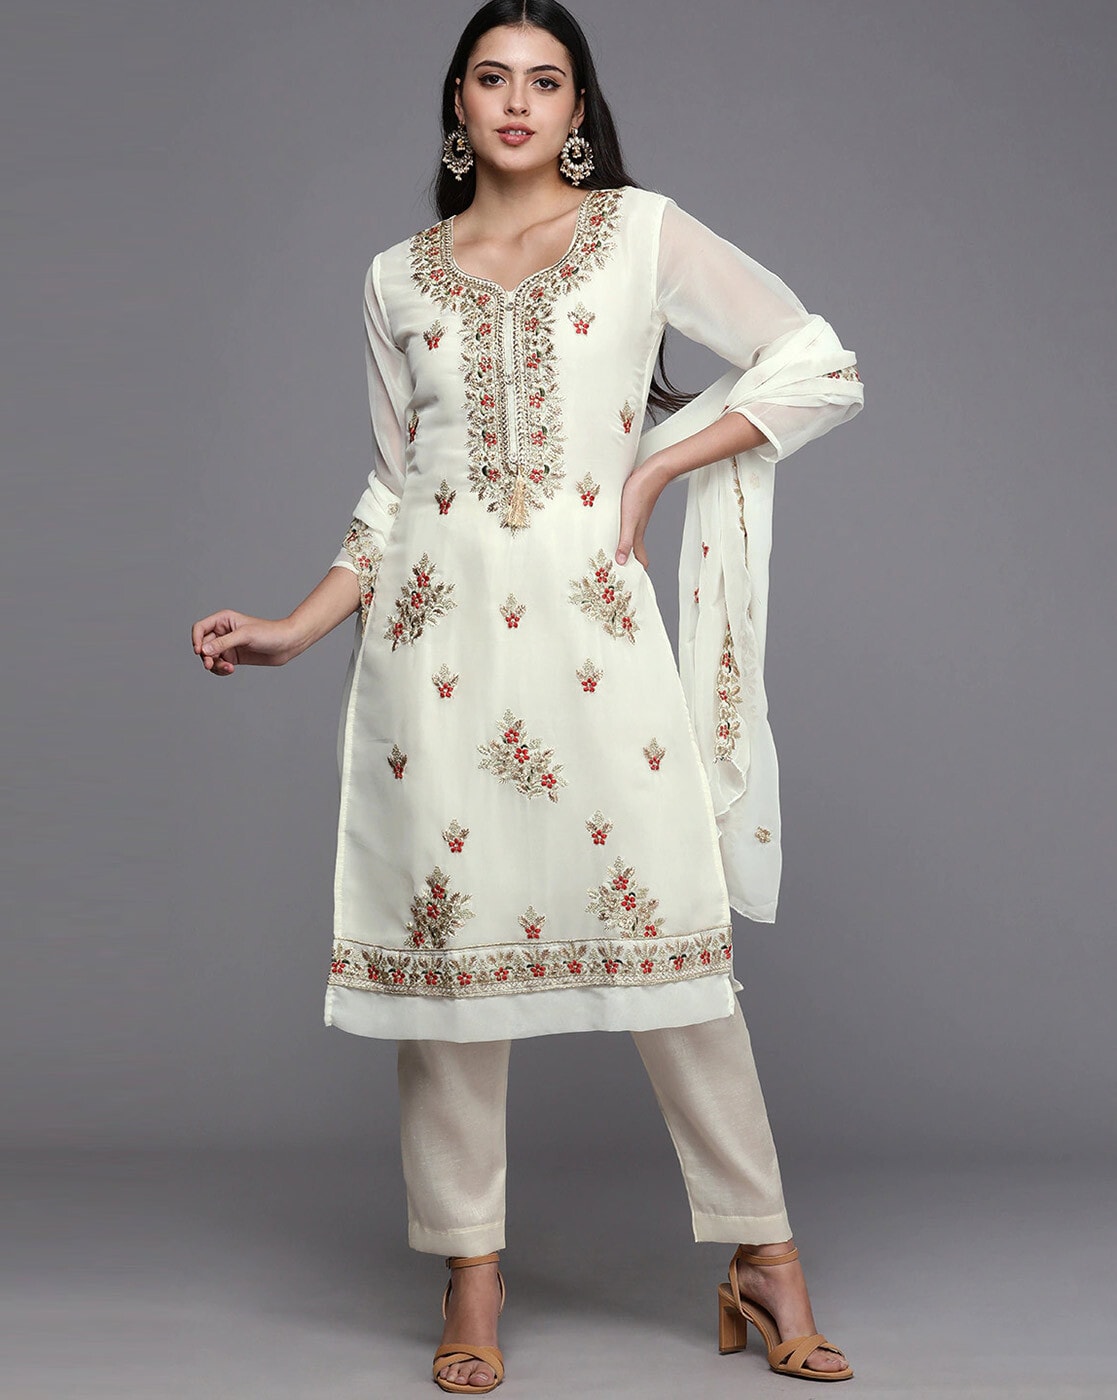 Buy Off-White Dress Material for Women by GRIVA DESIGNER Online ...